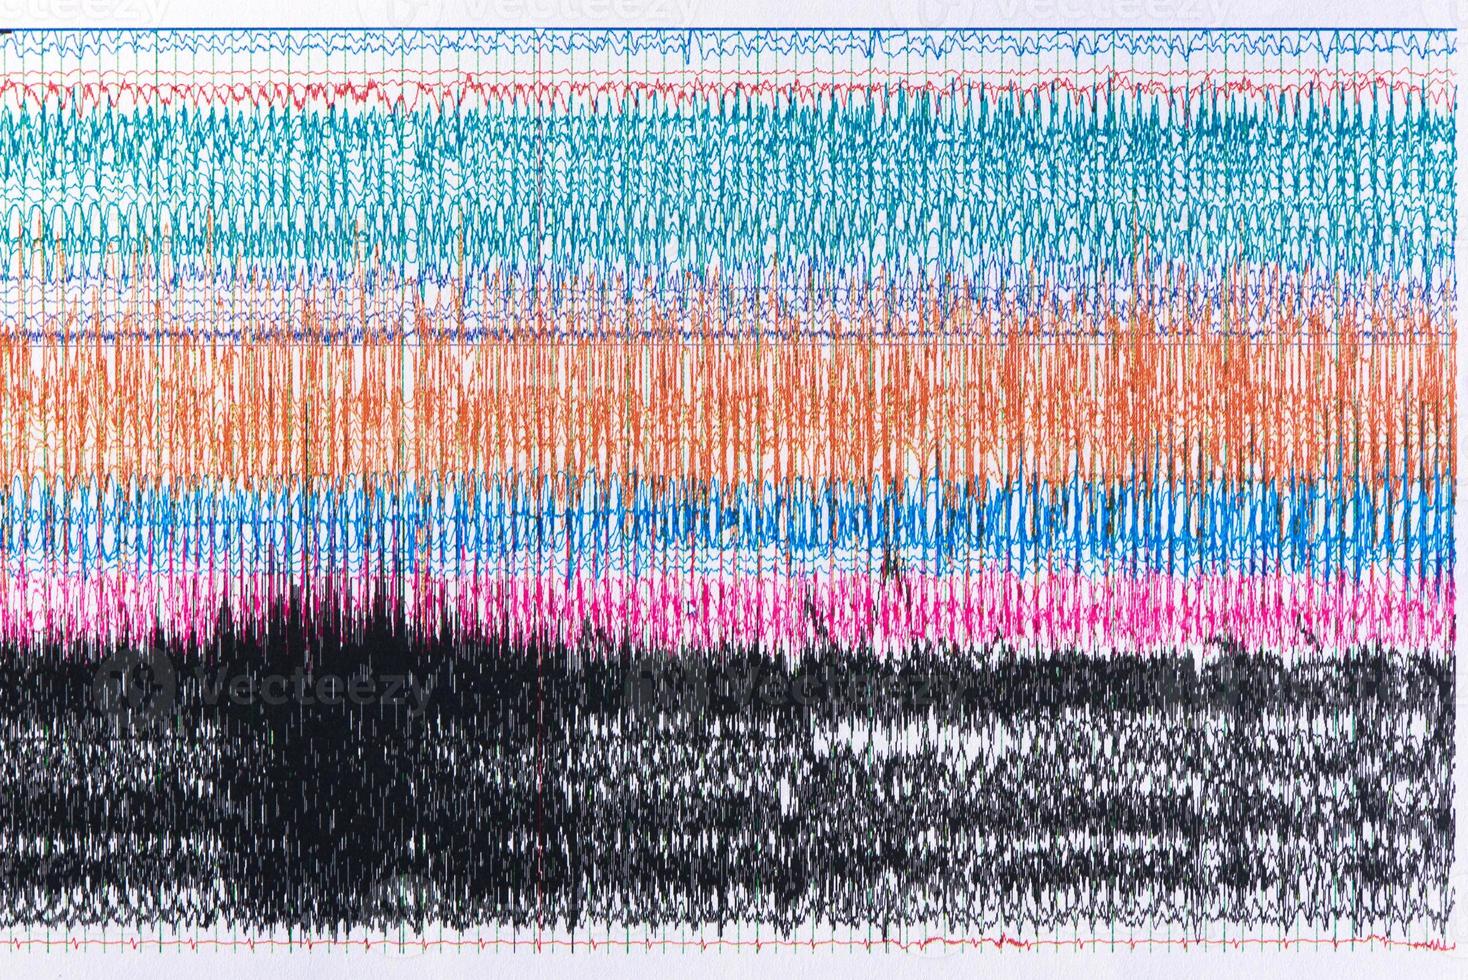 Photograph of brain waves during seizure. photo